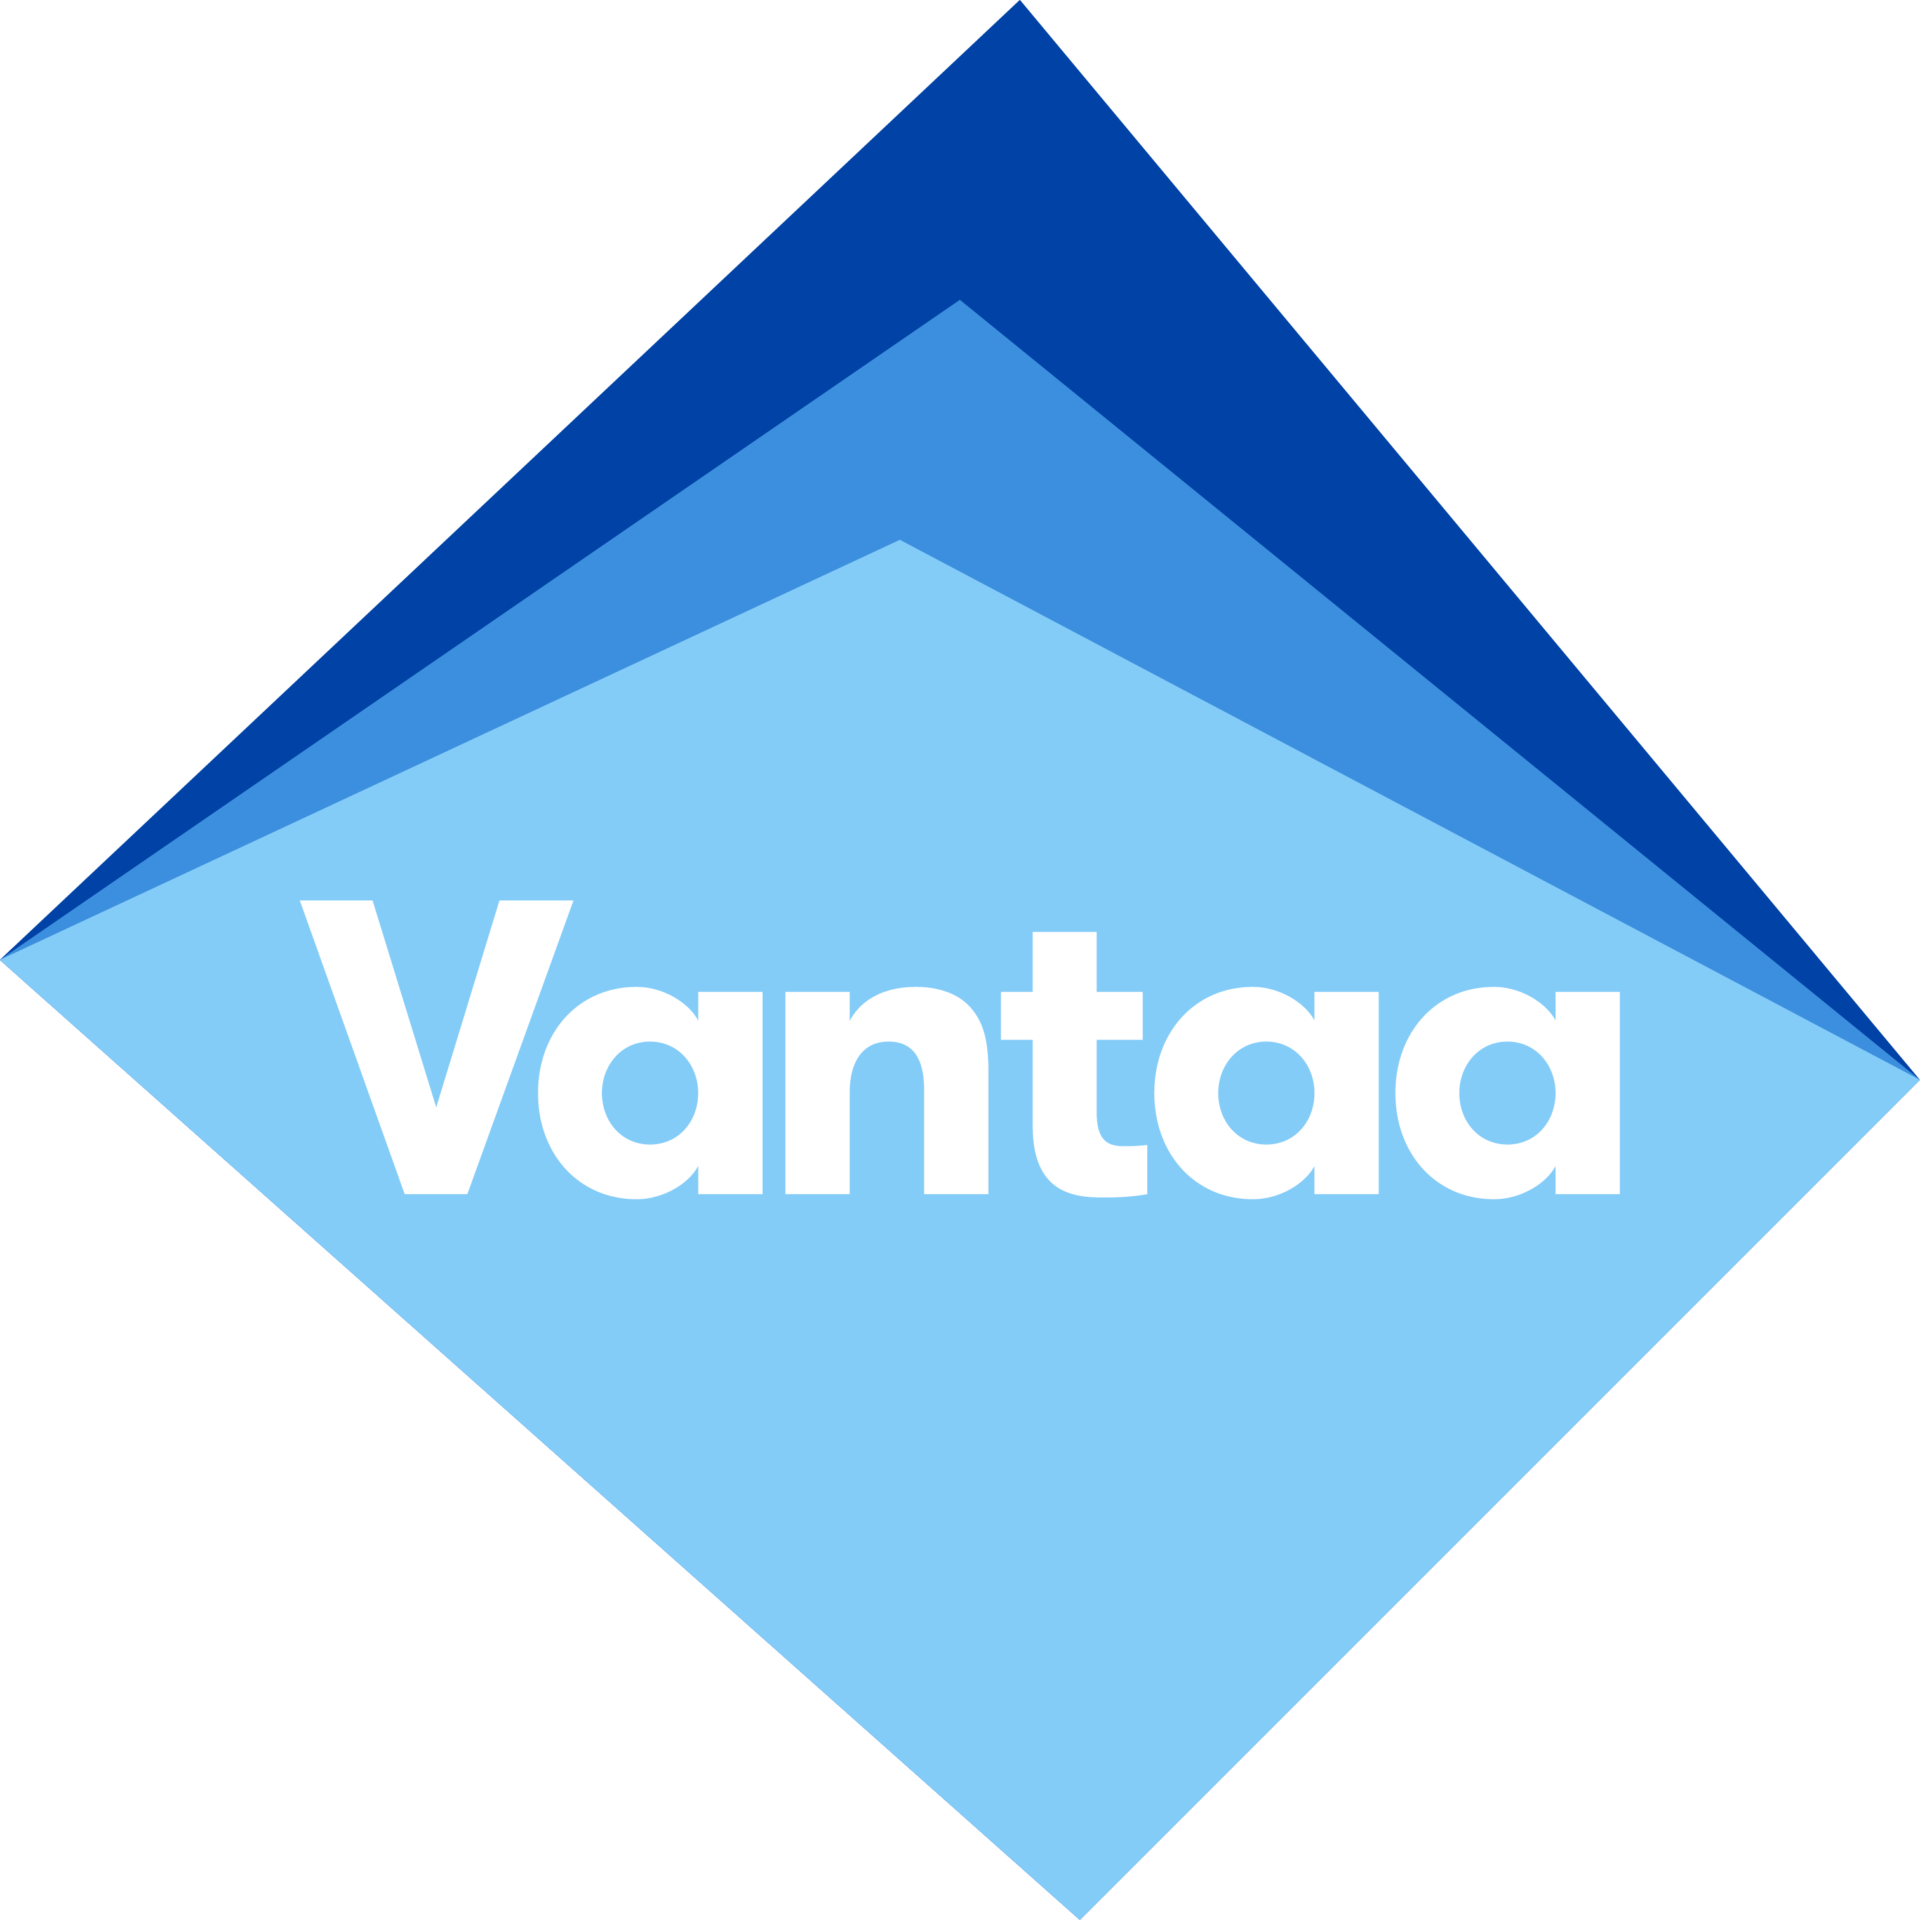 Business Vantaa